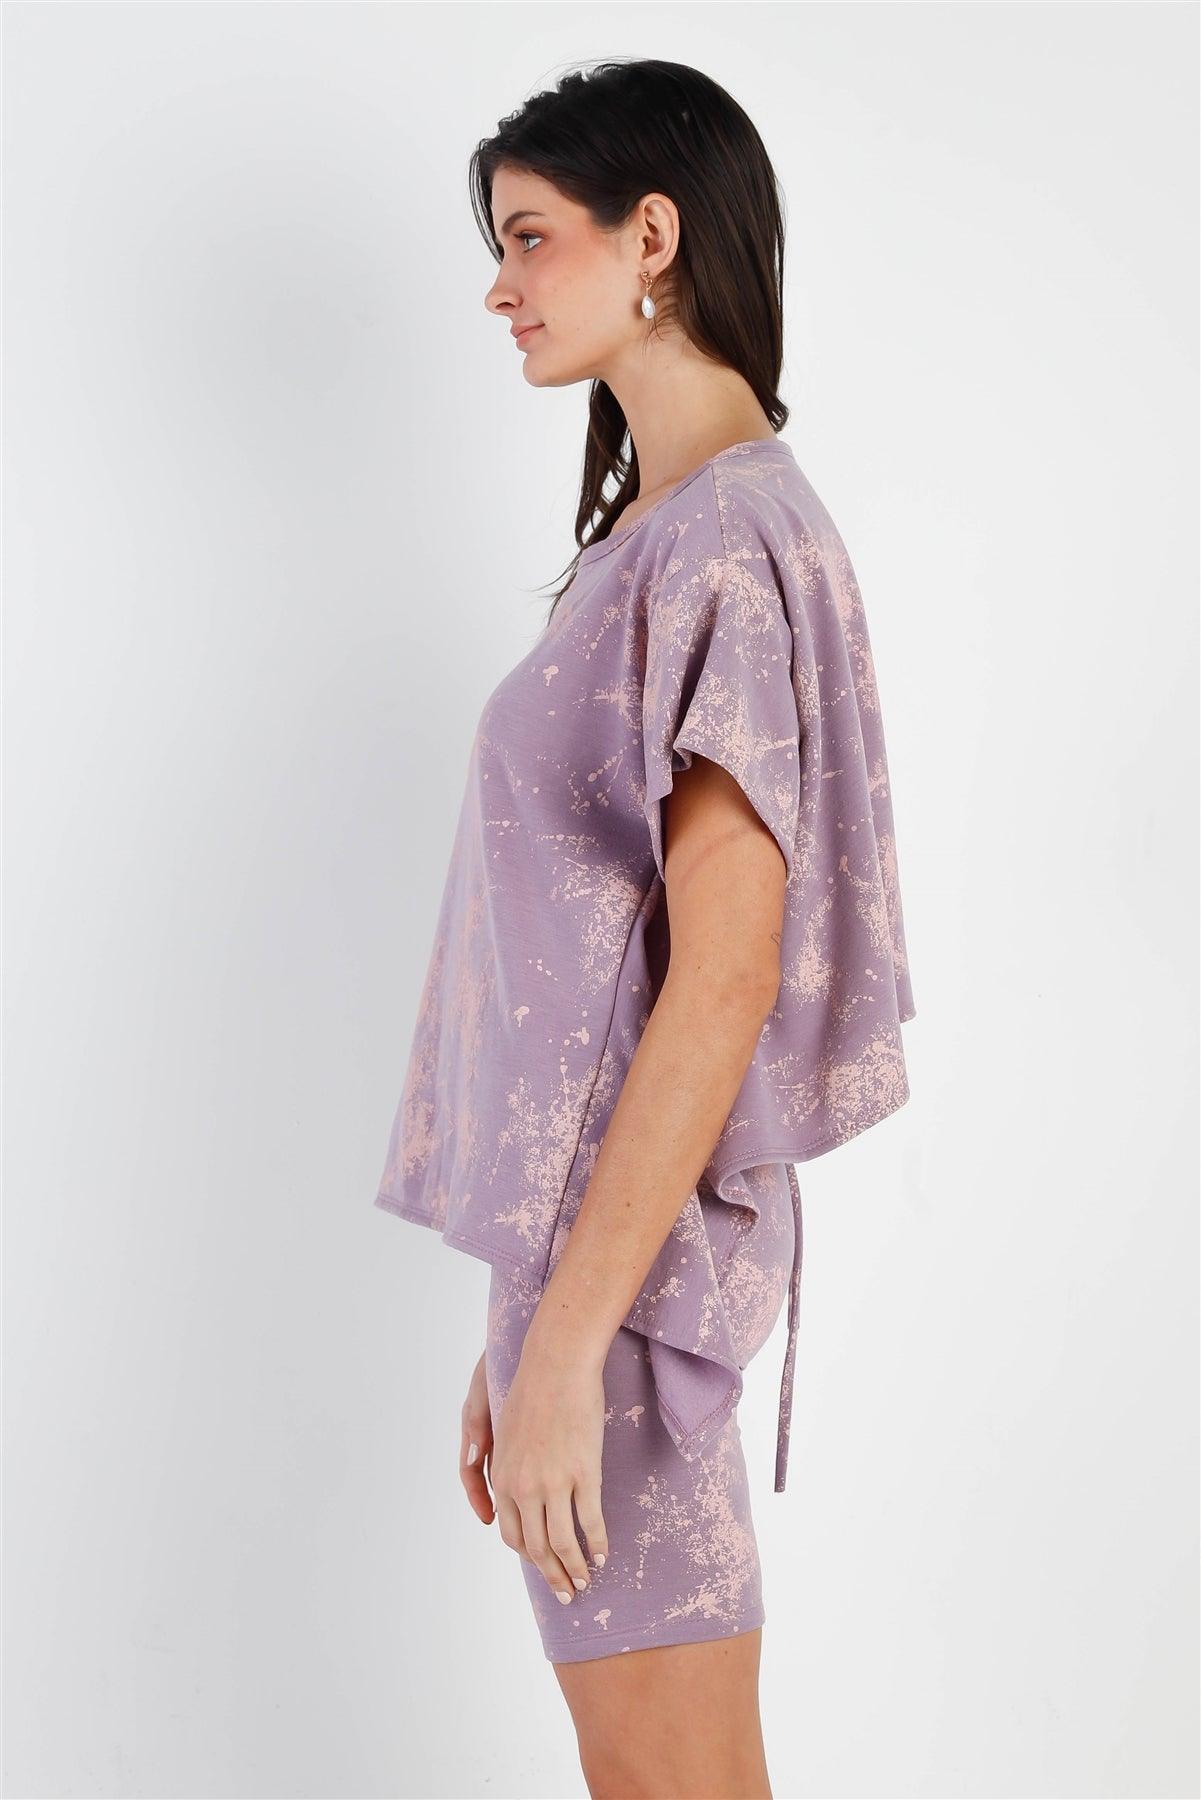 Lavender Splattered Paint Fleece Uneven Length Back Tie Detail Top & Biker Short Set /2-2-2